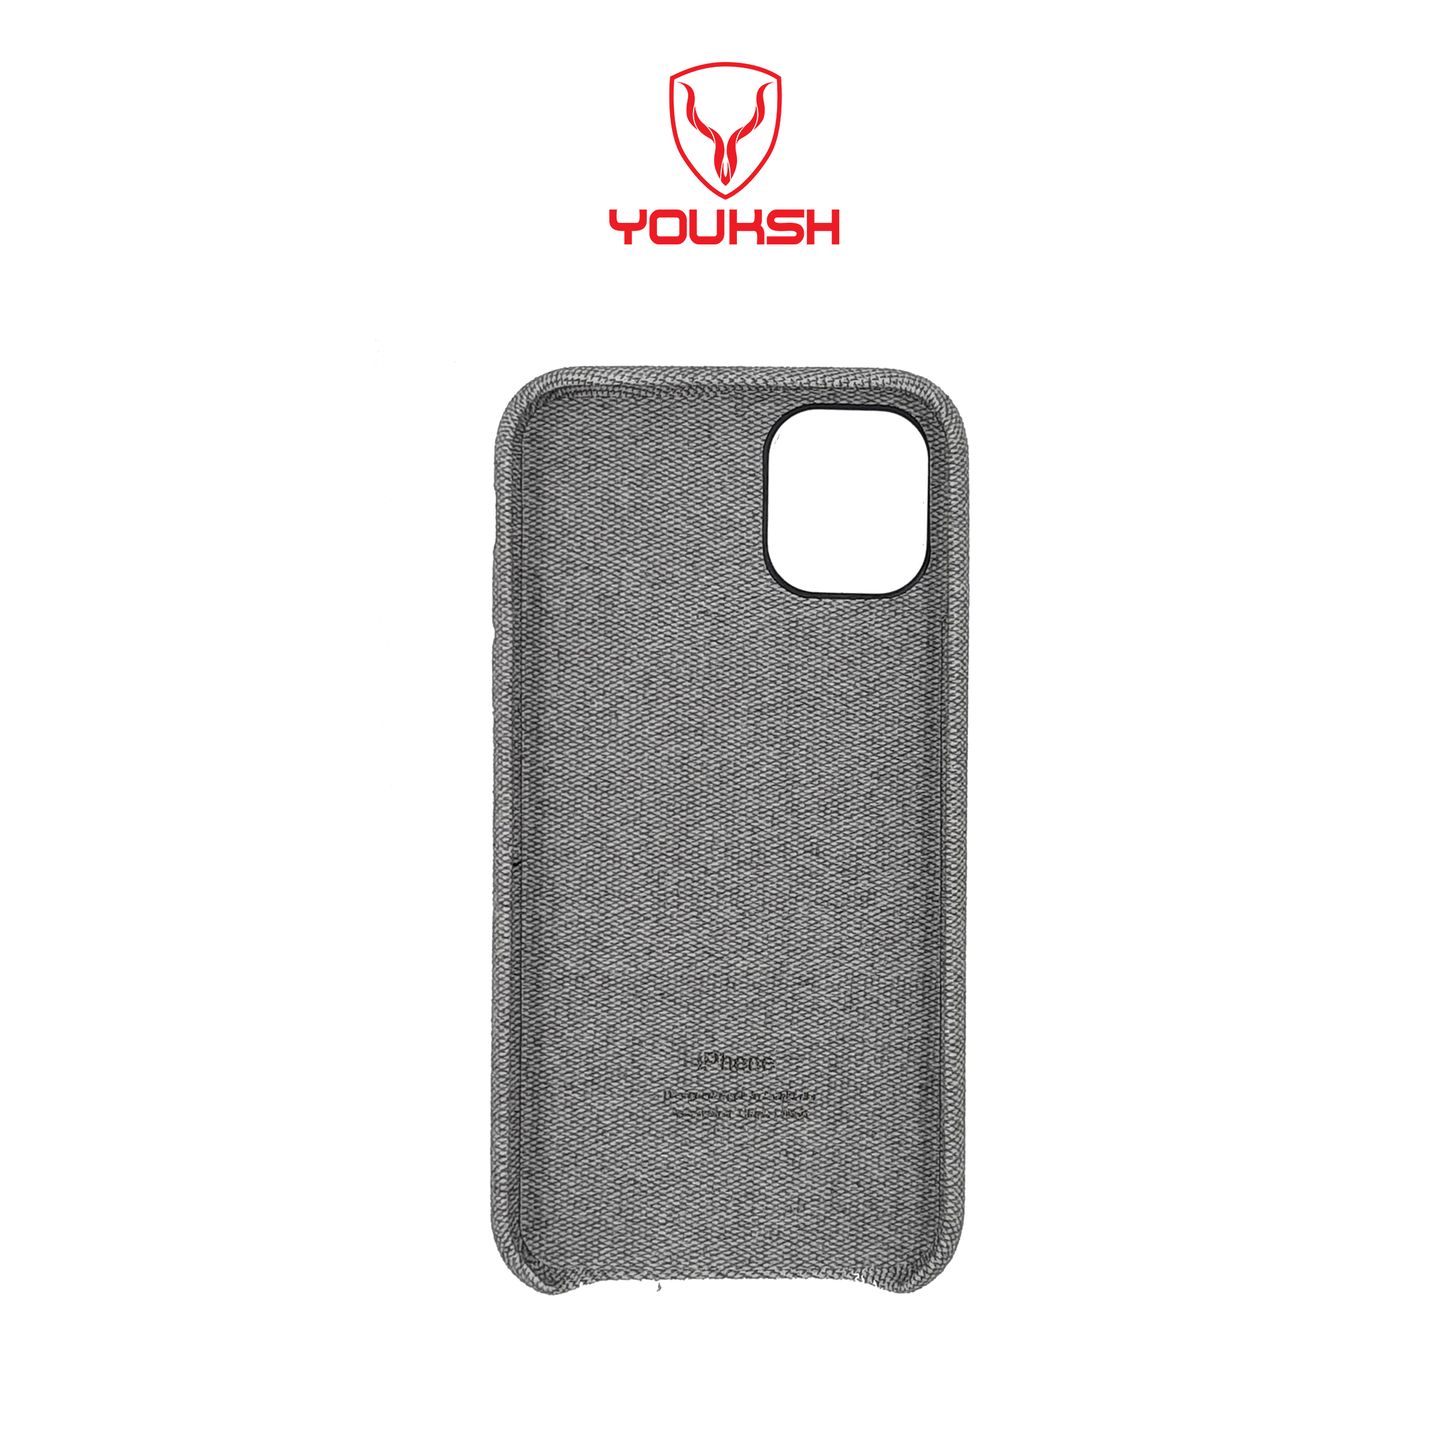 Apple iphone 11 - Youksh Canvas Case - Hot Popular Phone Case.